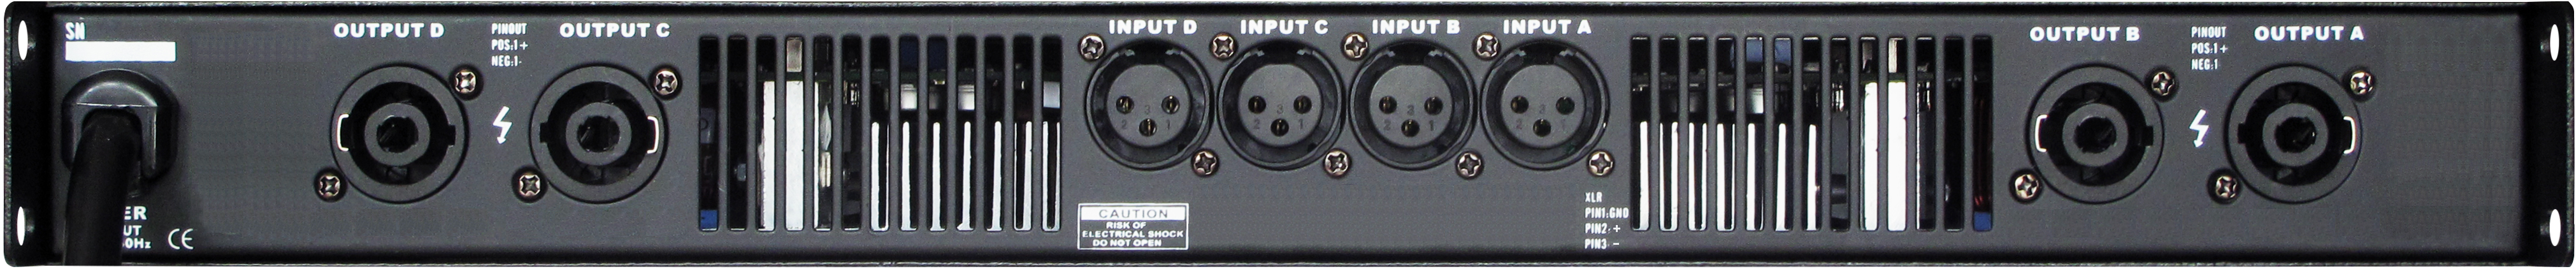 Verstärker M80Q-DSP - GISEN Audio